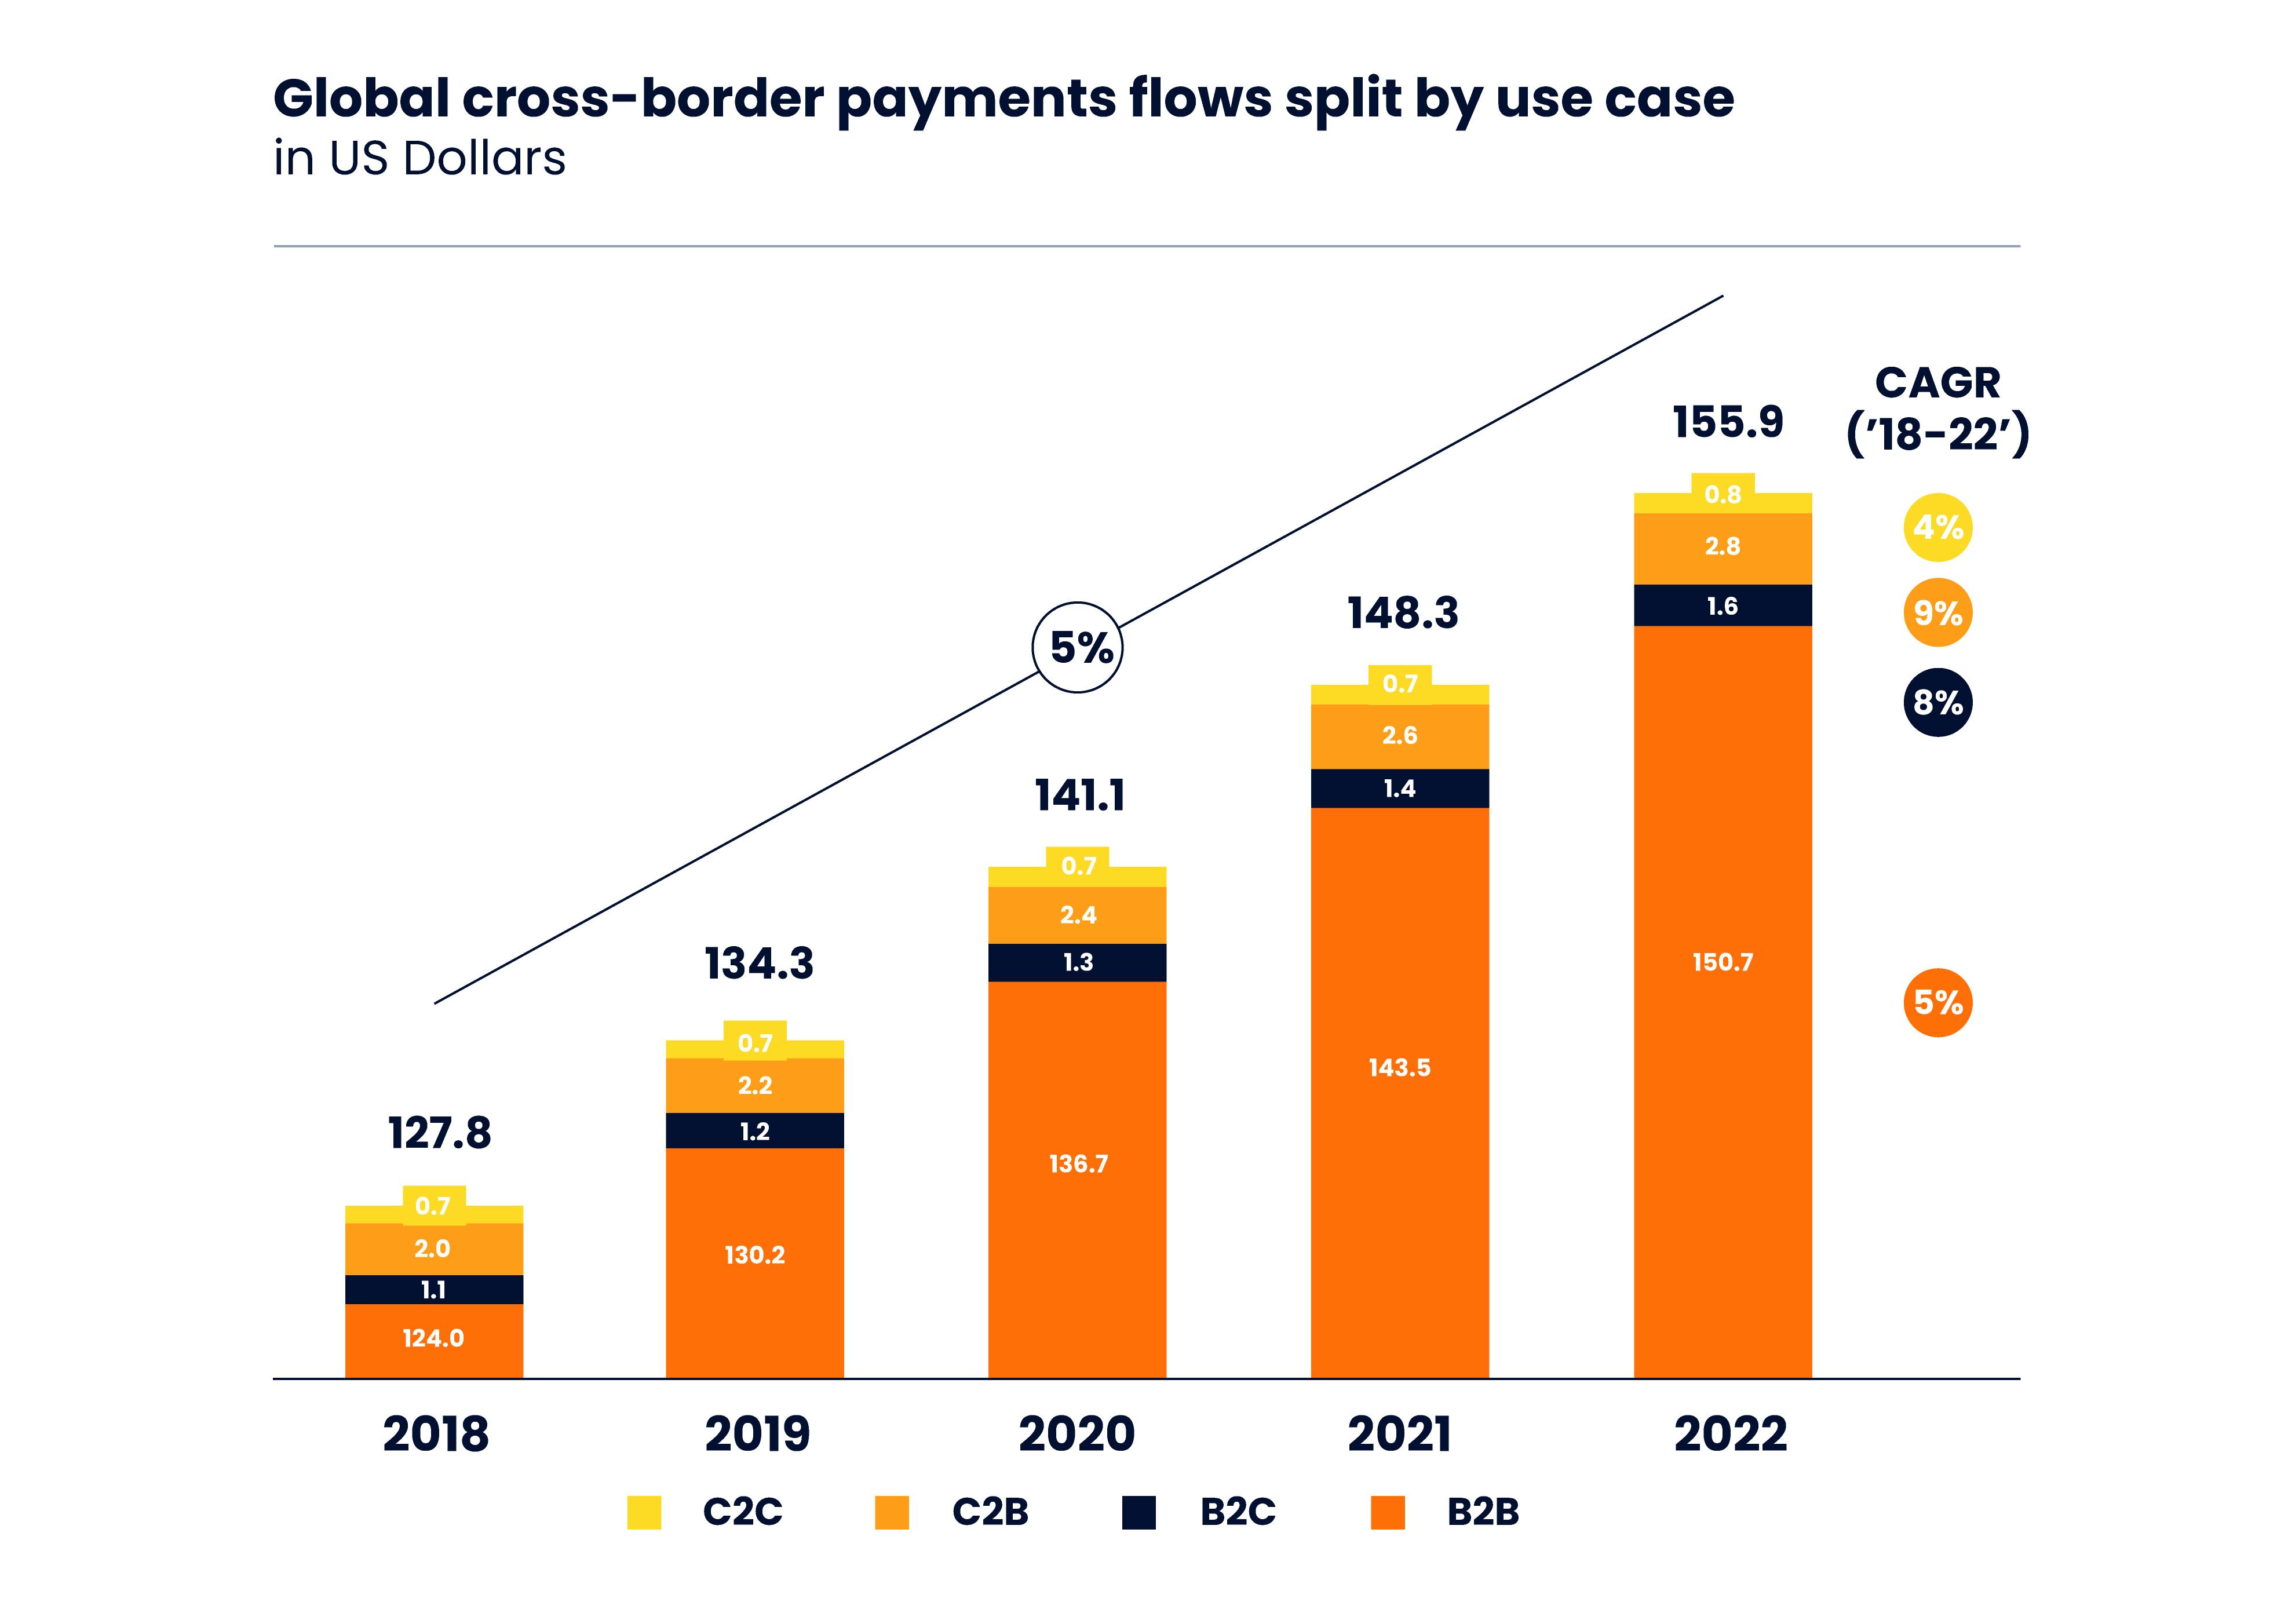 Global cross-border payments flows split by use case. C2C, C2B, B2C, B2B